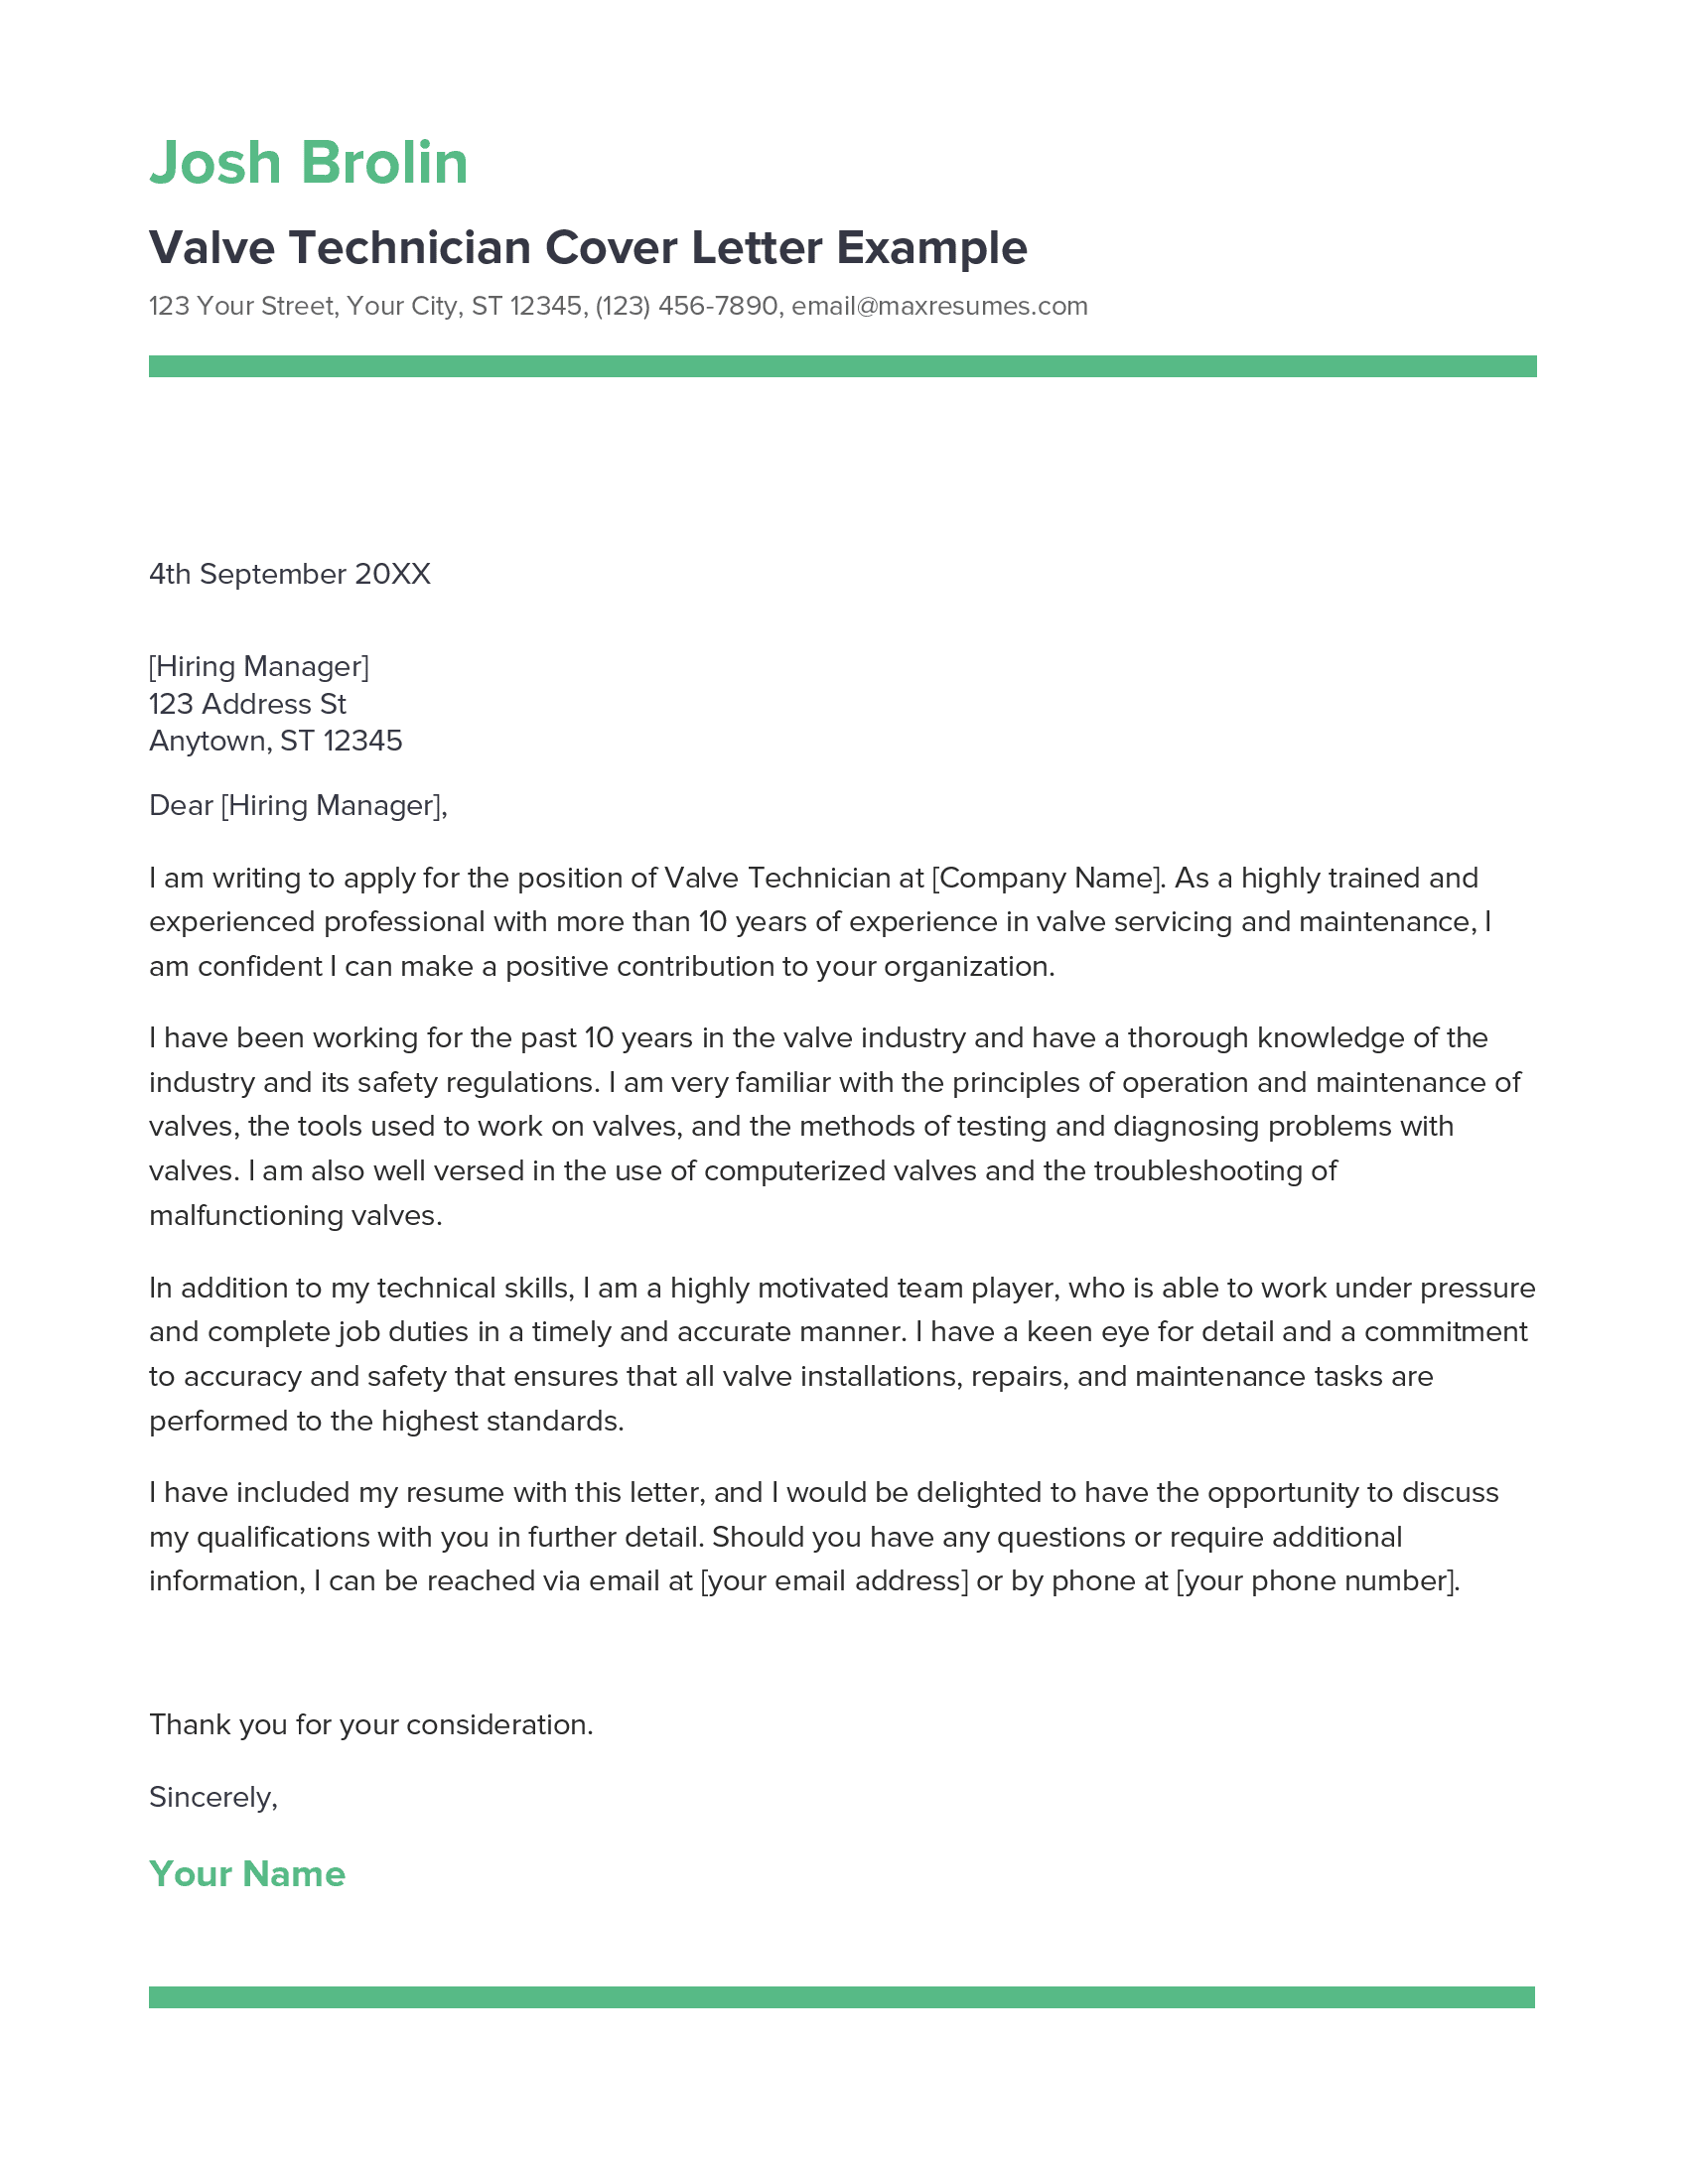 Valve Technician Cover Letter Example